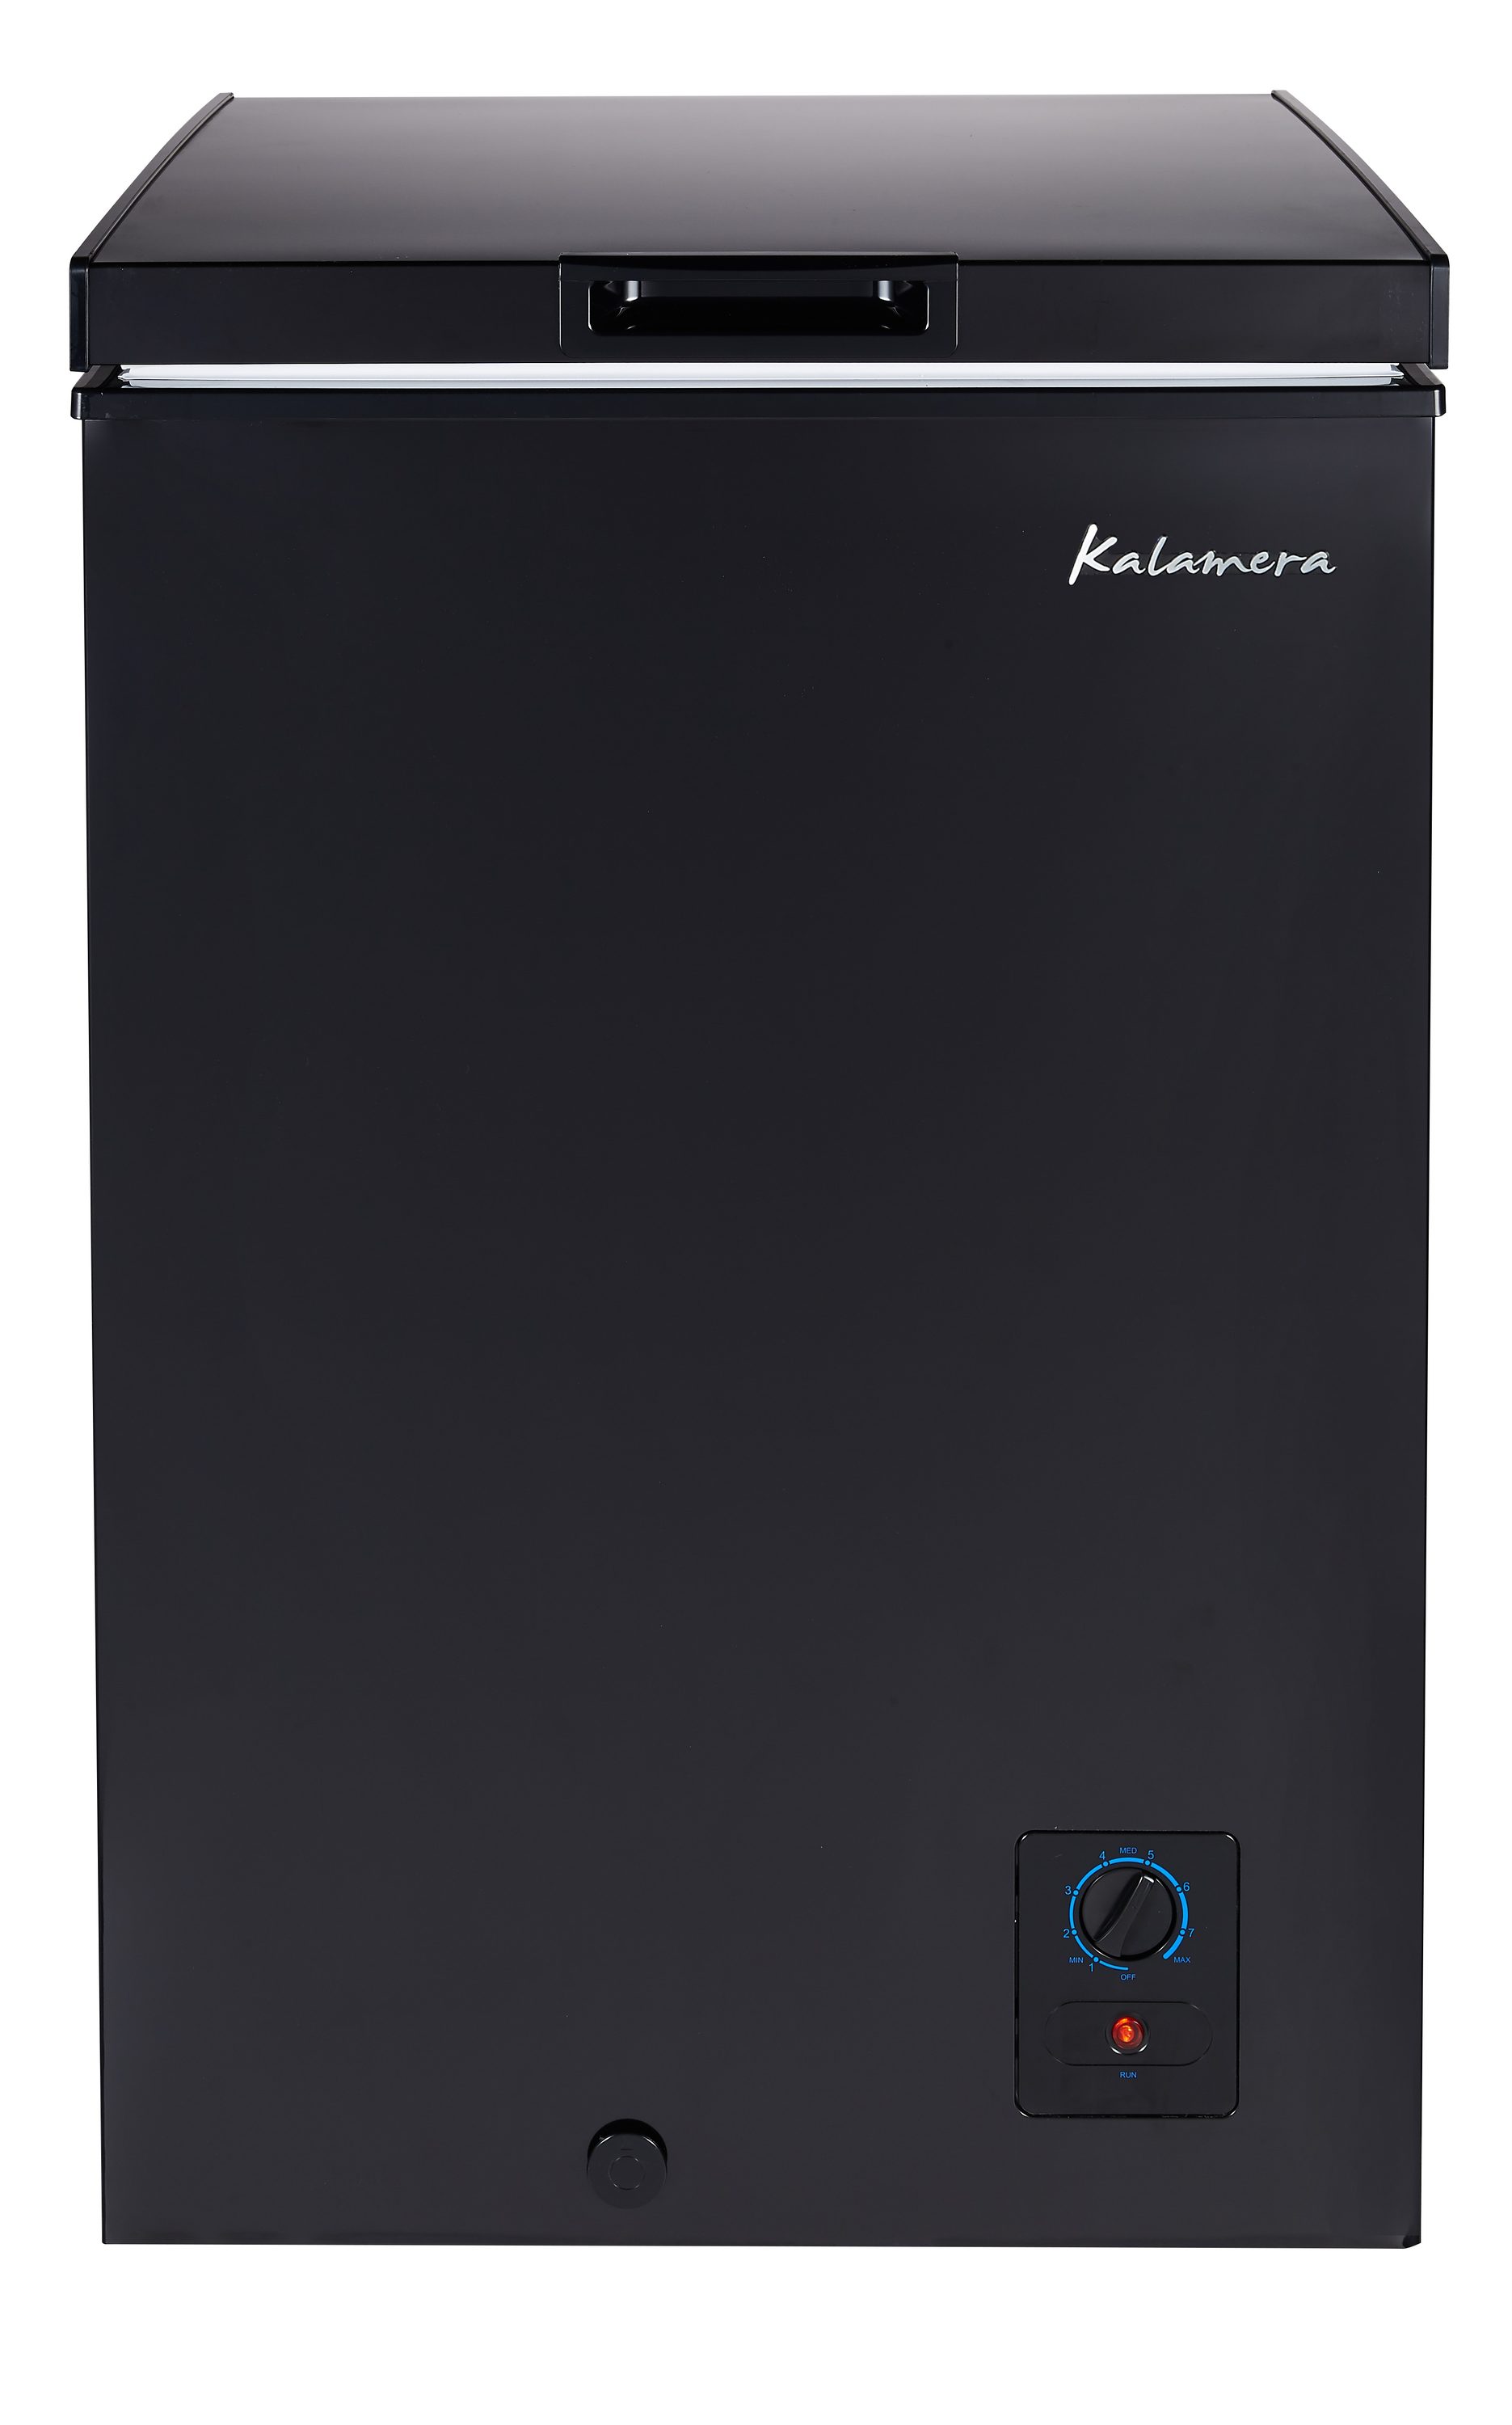 Siavonce 3.5 cu. ft. Mini Refrigerator in Black Compact